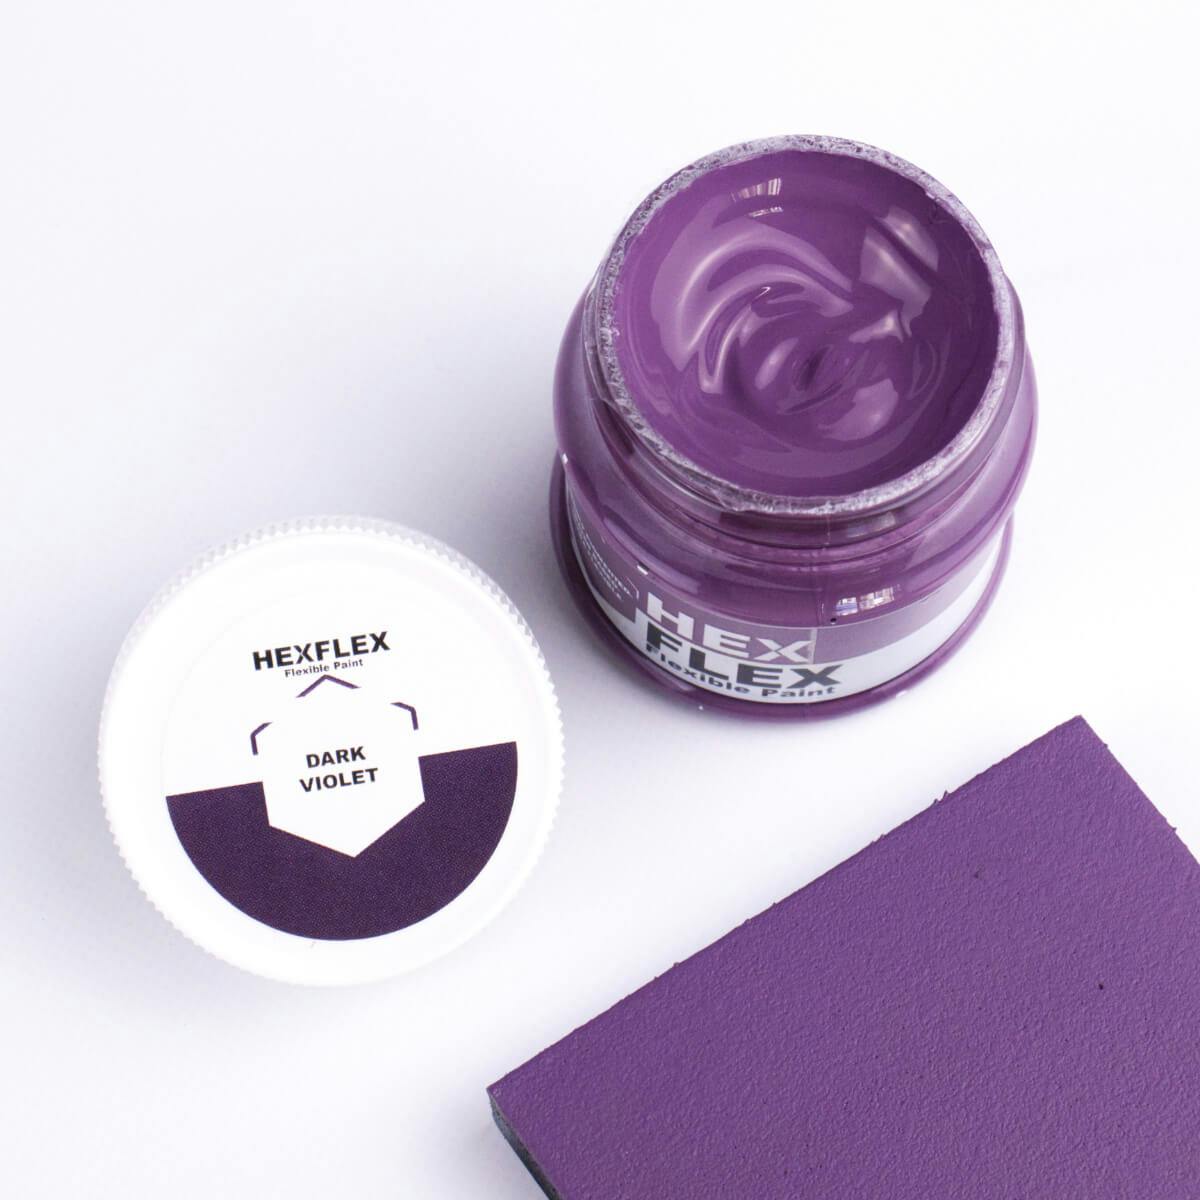 The bottle, cap and dark violet HexFlex colour sample